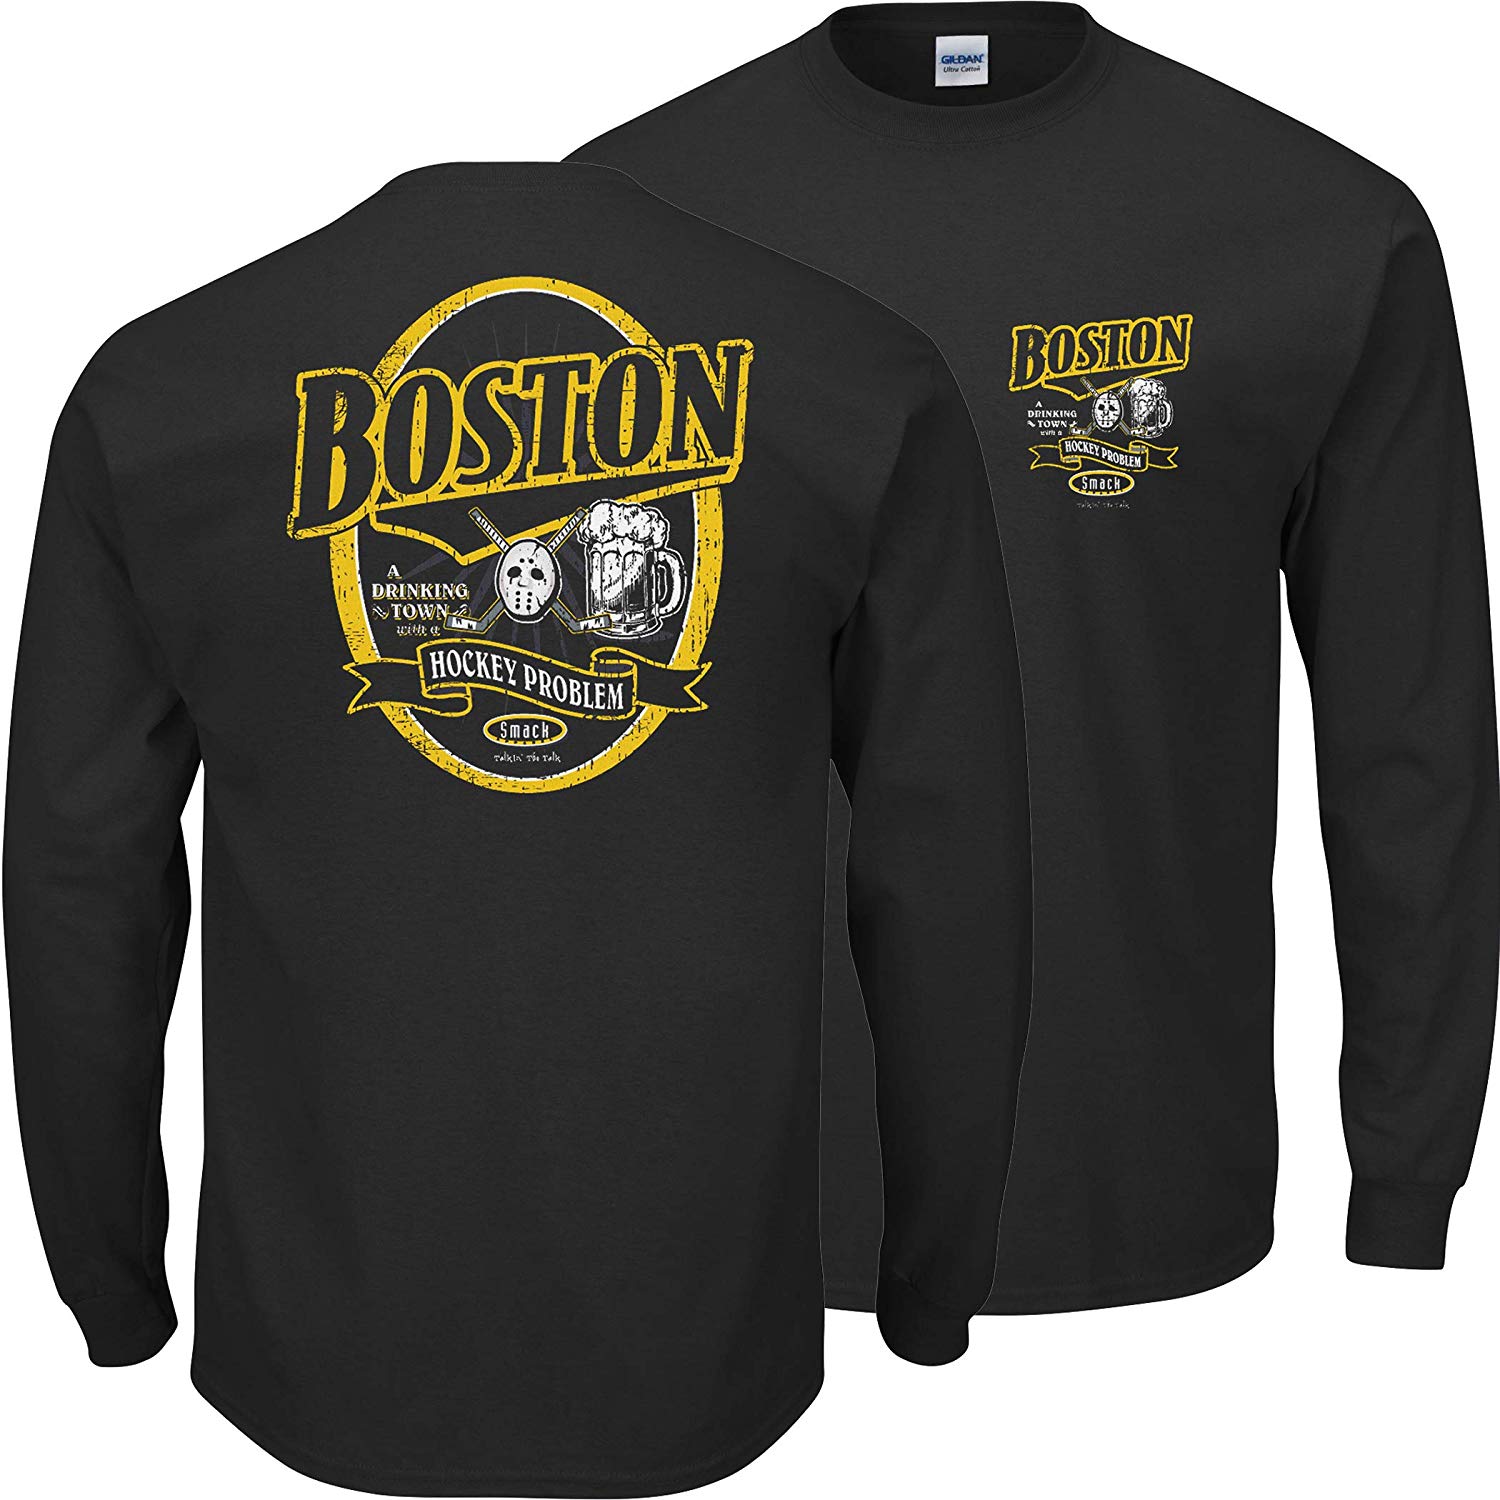 Boston Bruins Gear, Bruins Jerseys, Boston Pro Shop, Boston Apparel